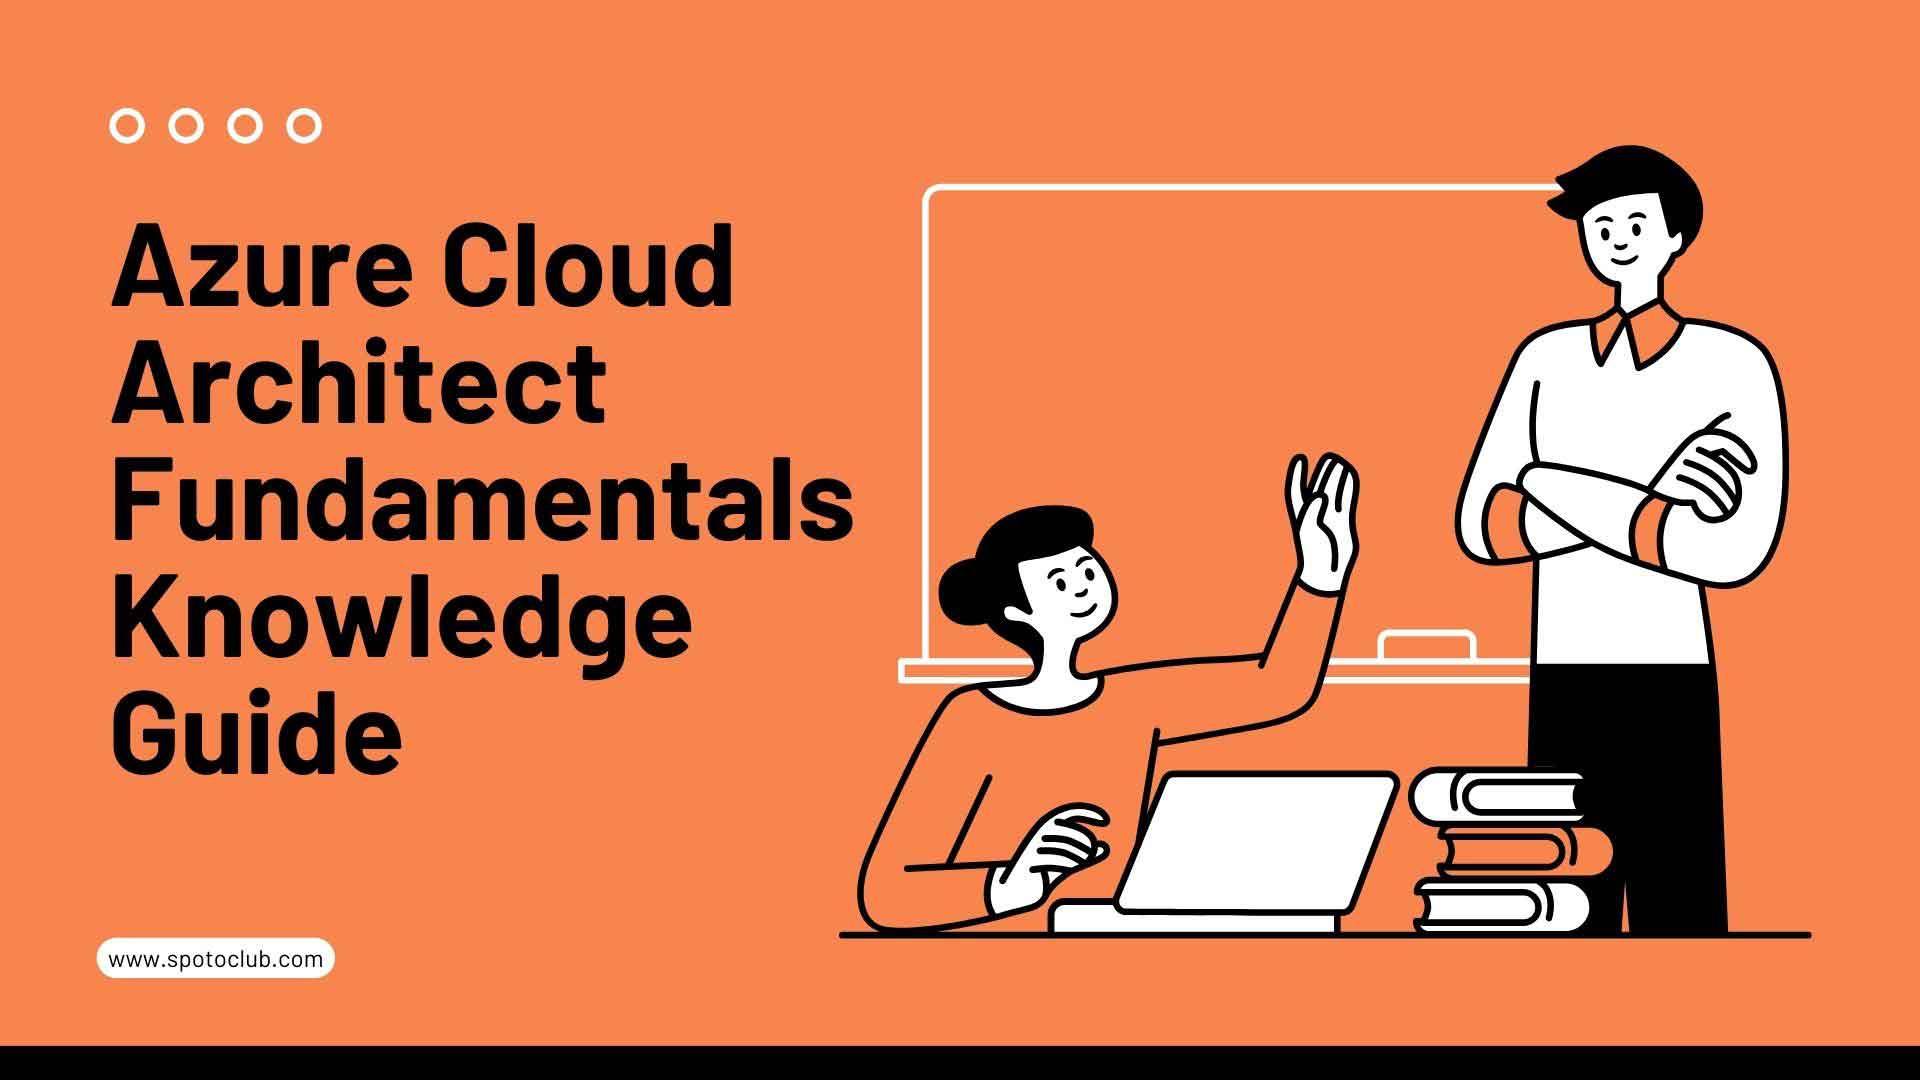 Azure Cloud Architect Fundamentals